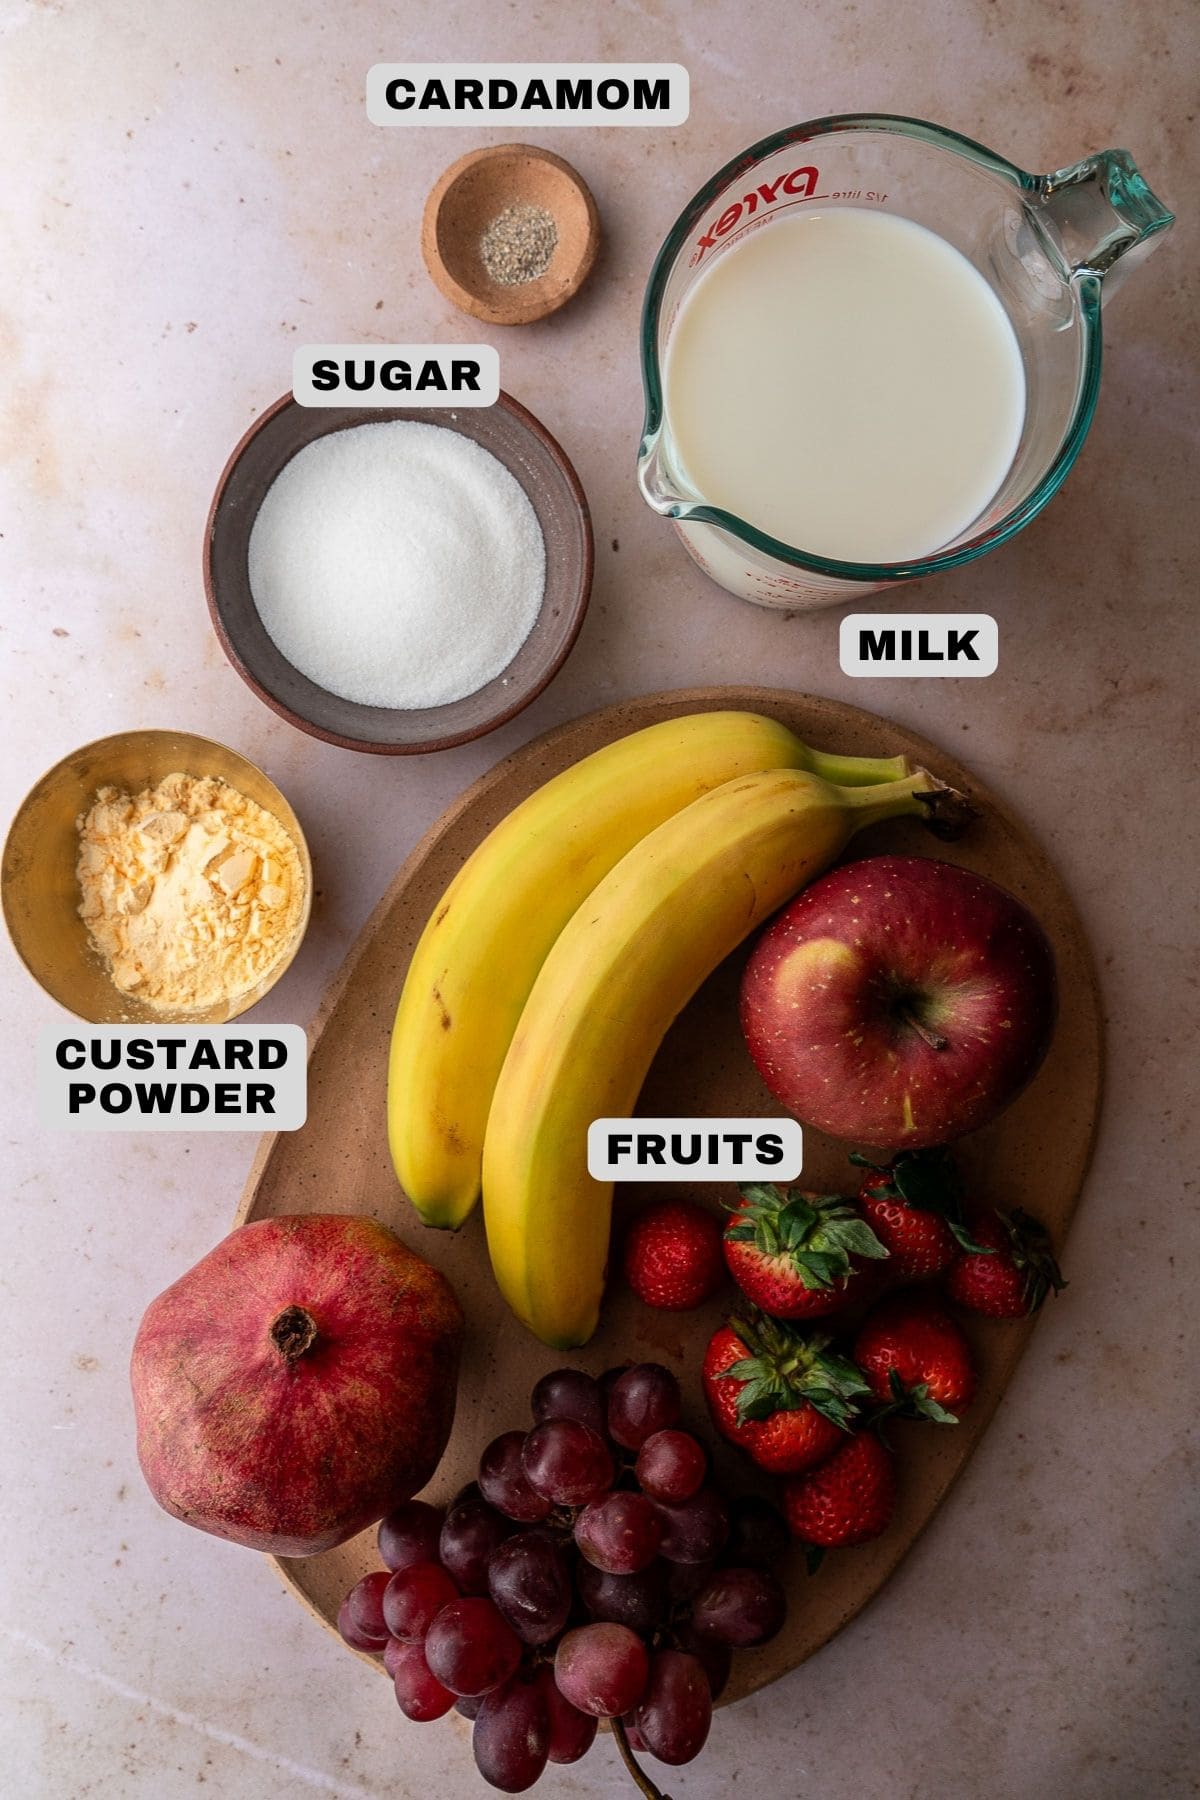 Cardamom, milk, sugar, custard powder, fruit ingredients with labels.